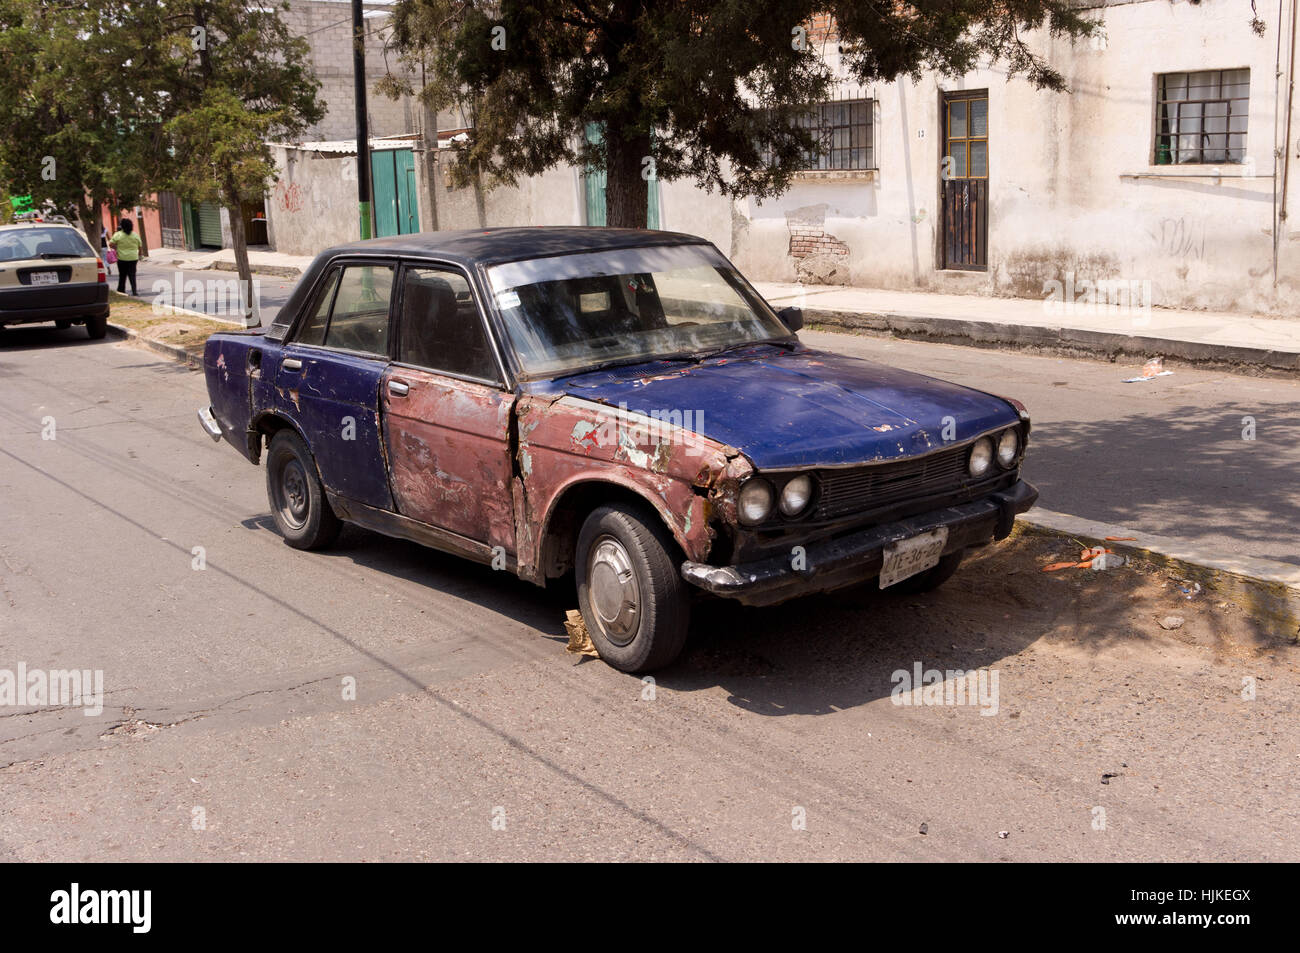 Old Datsun car in Mexico Stock Photo